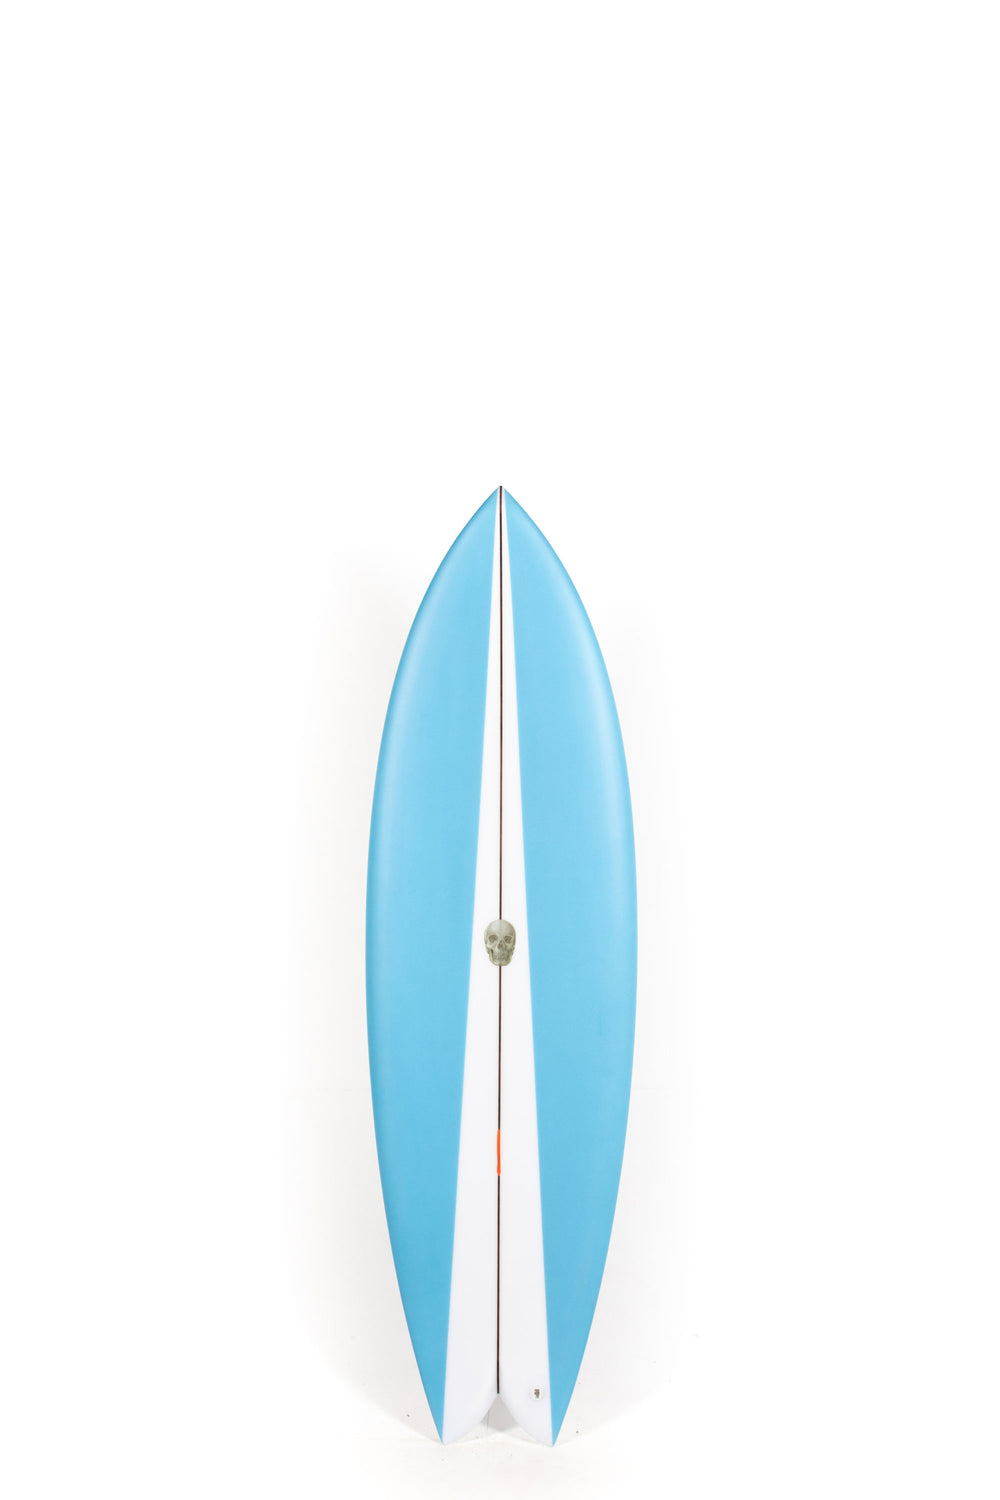 Pukas Surf Shop - Christenson Surfboards - NAUTILUS - 5'10